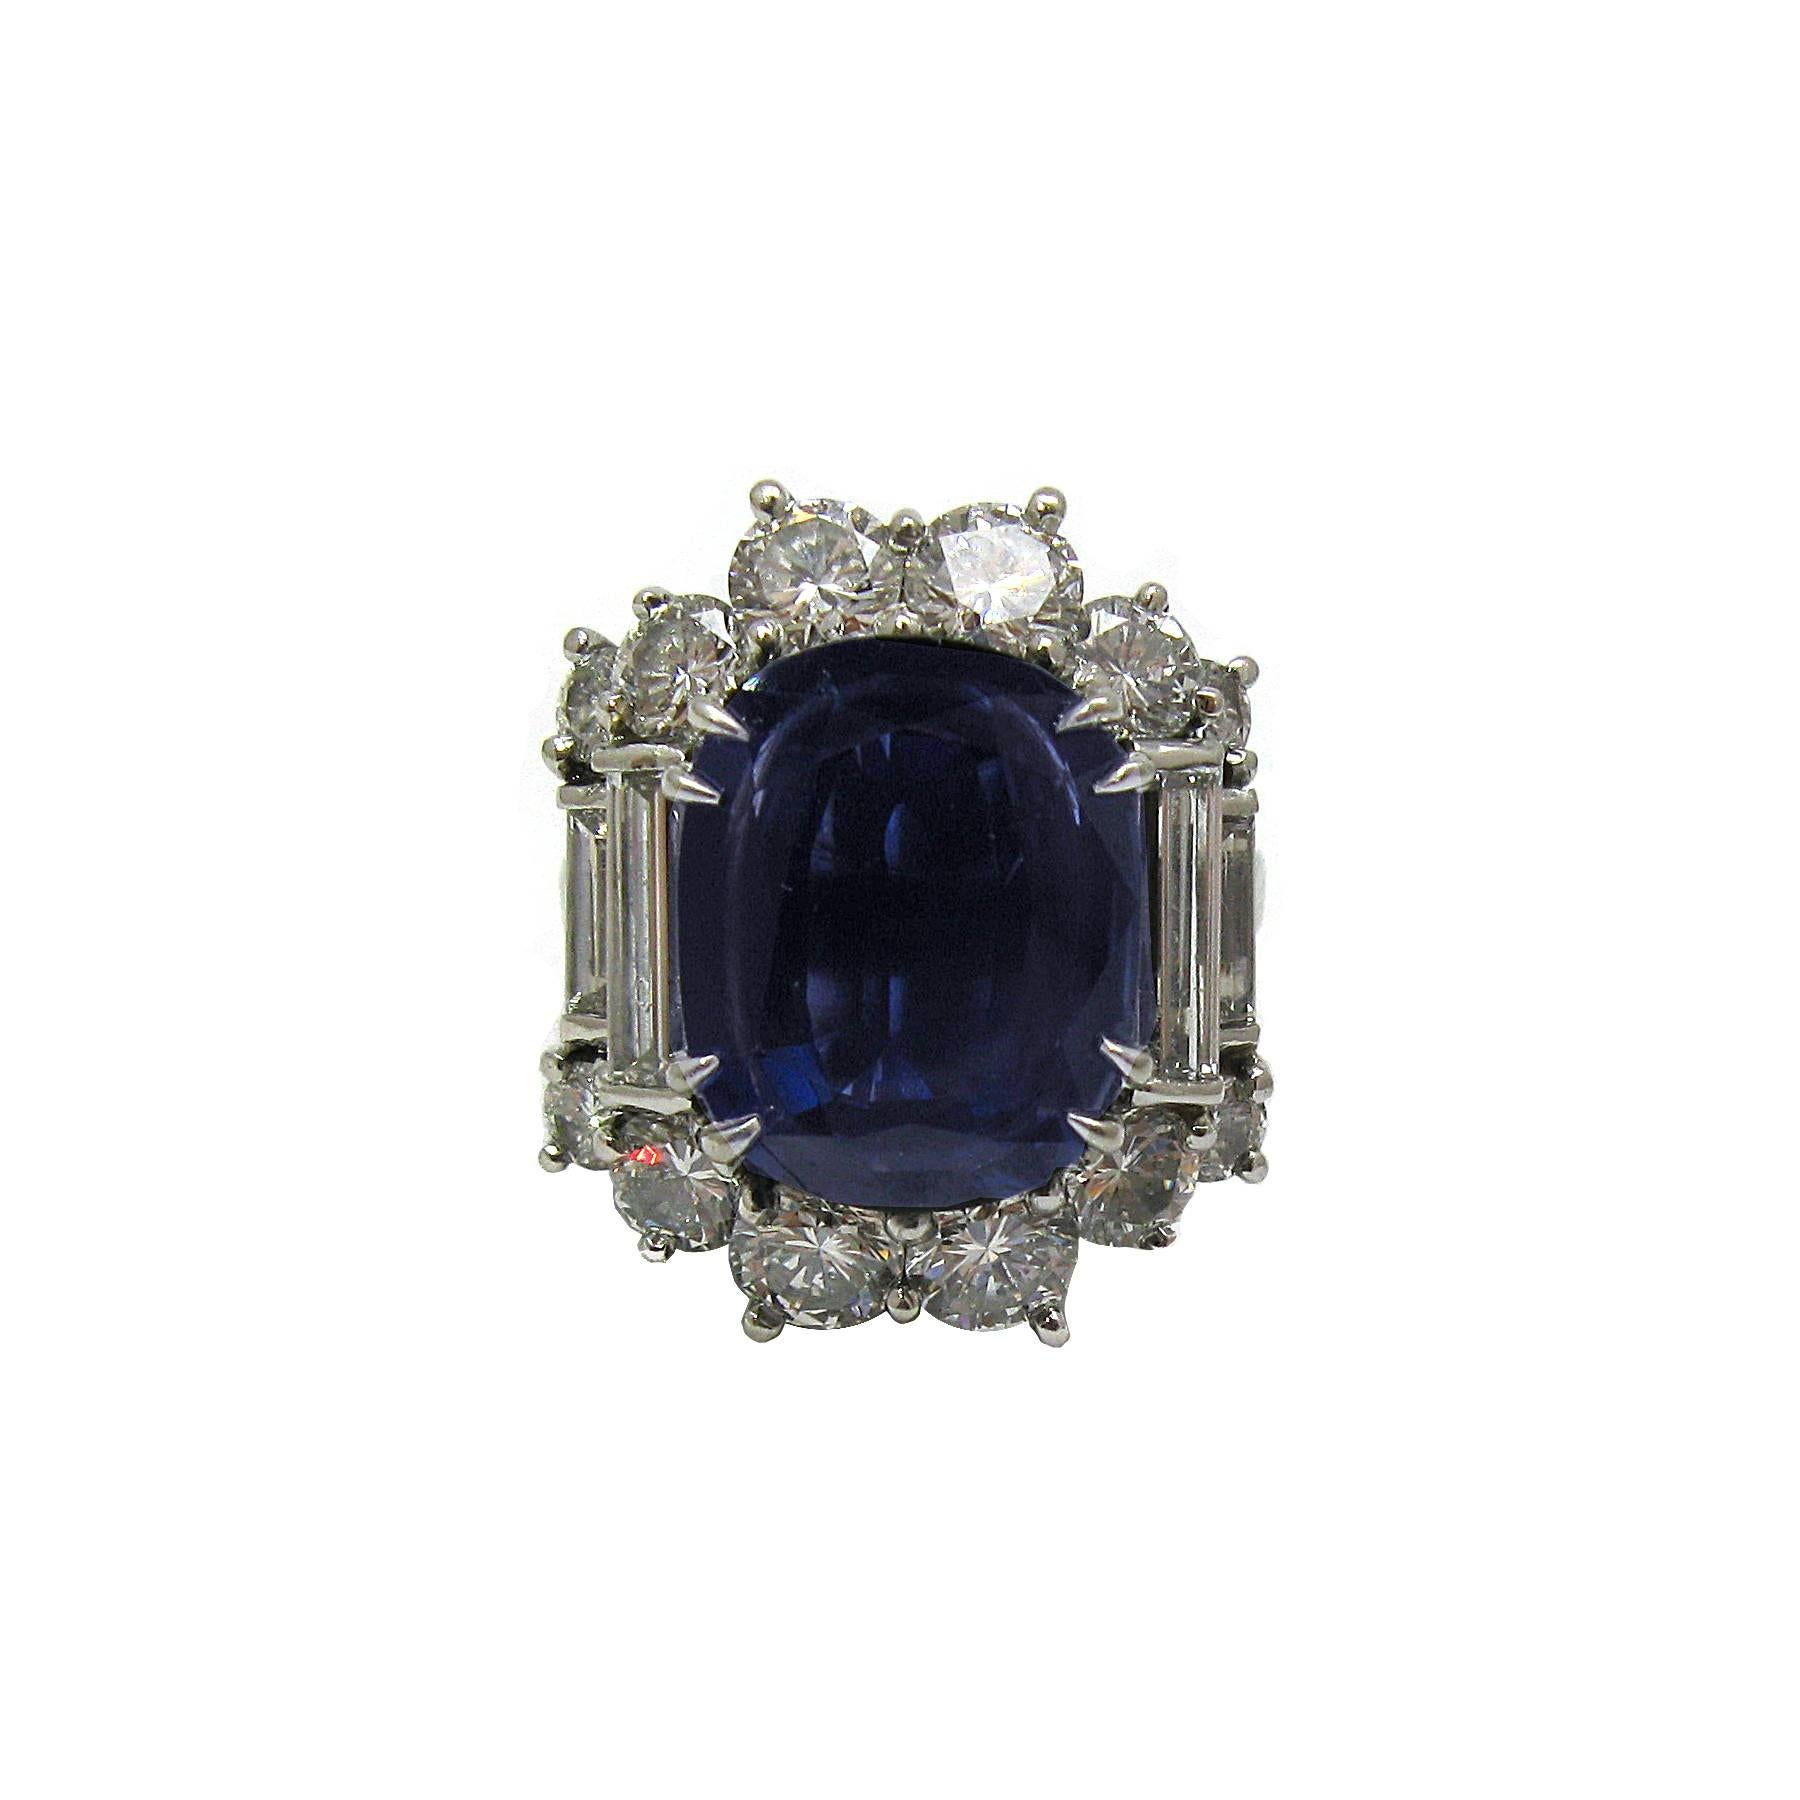 Contemporary 6.59 Carat Cushion Cut Blue Sapphire and Diamond Ring in Platinum